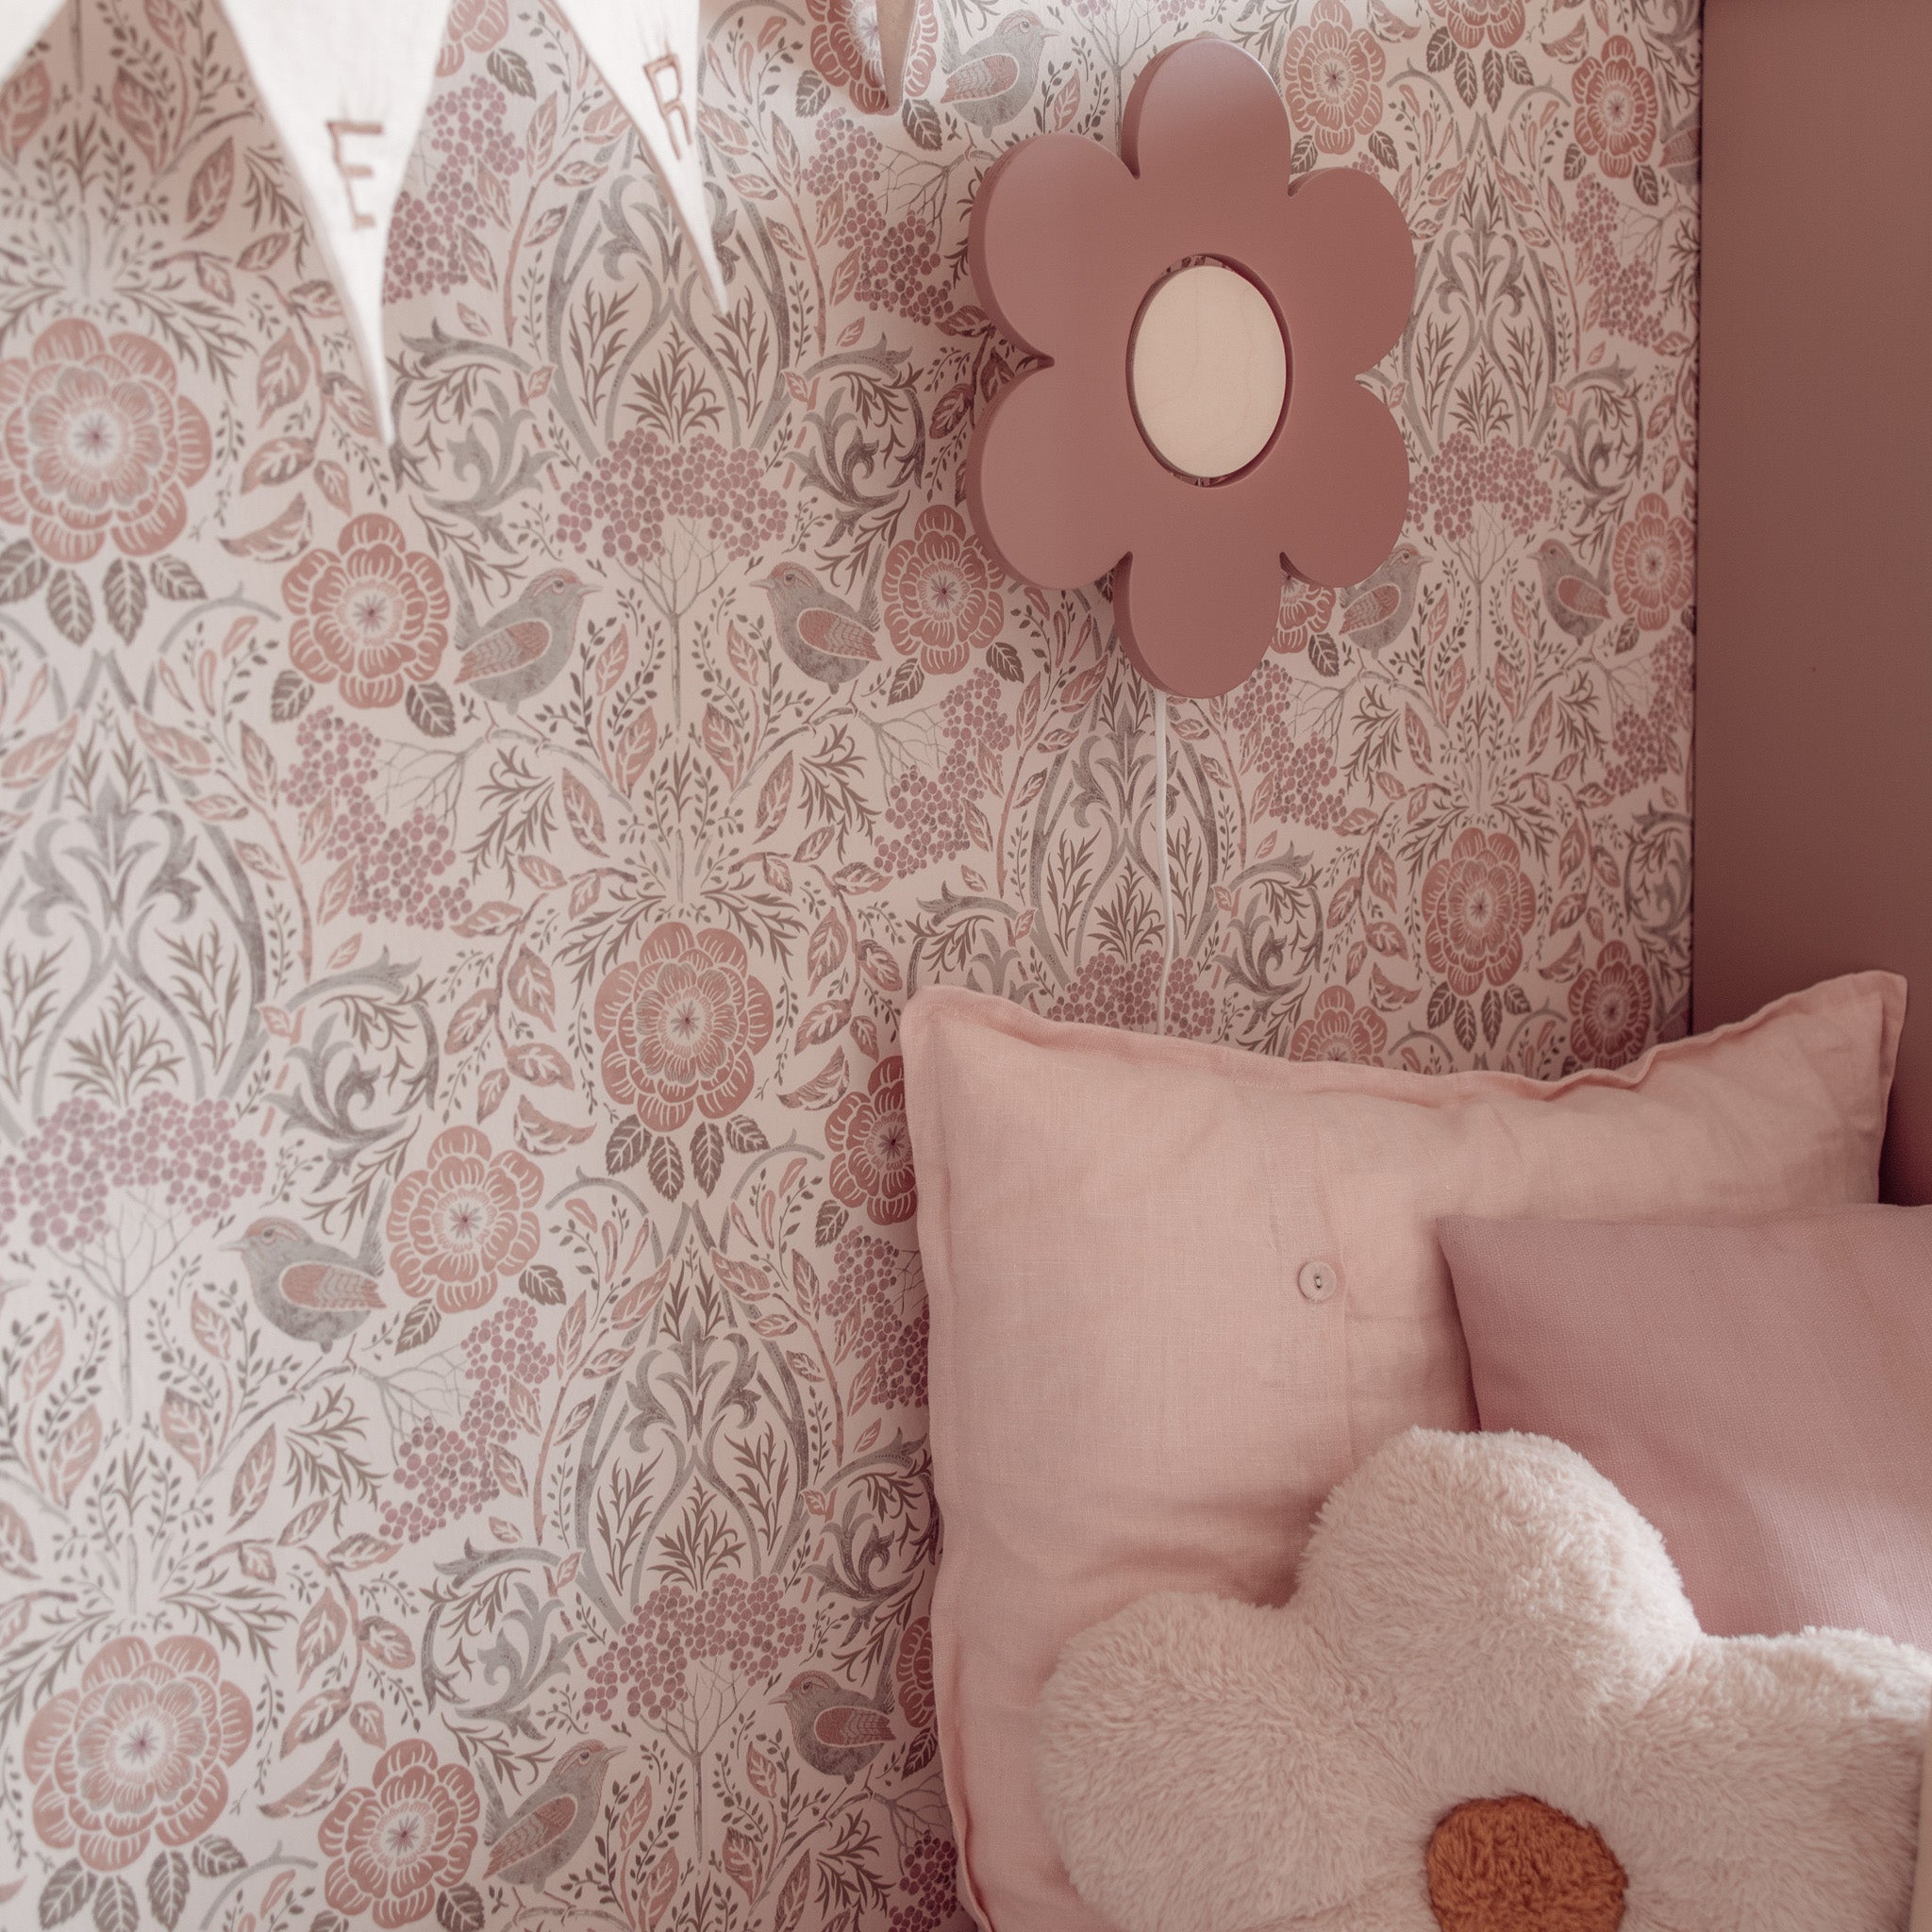 Wooden wall lamp children's room | Flower - Terra pink